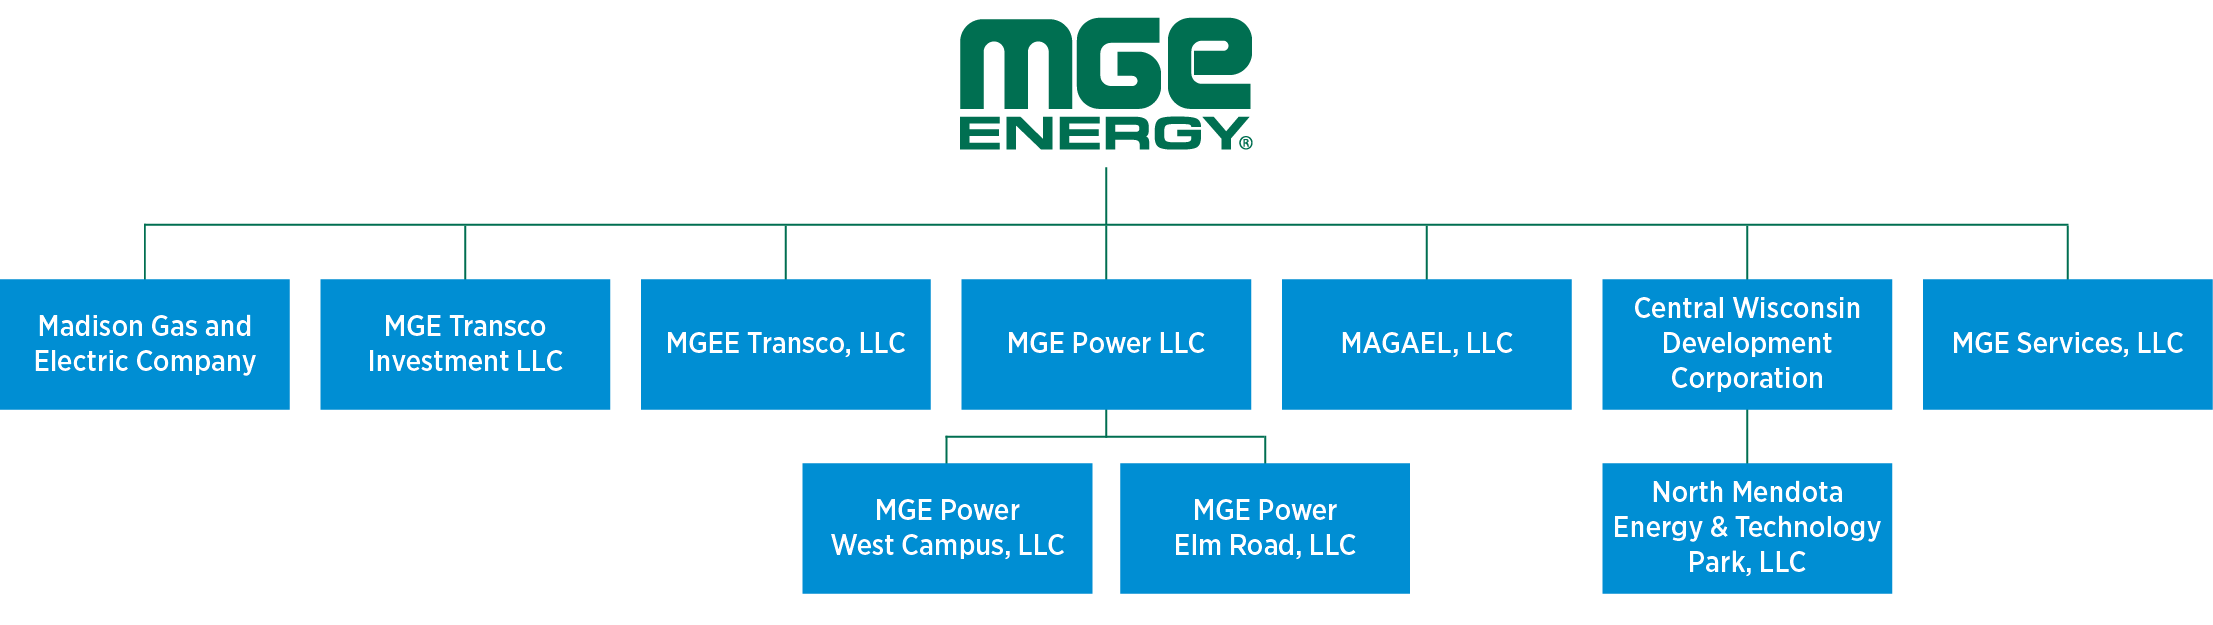 MGEE Corporate profile chart